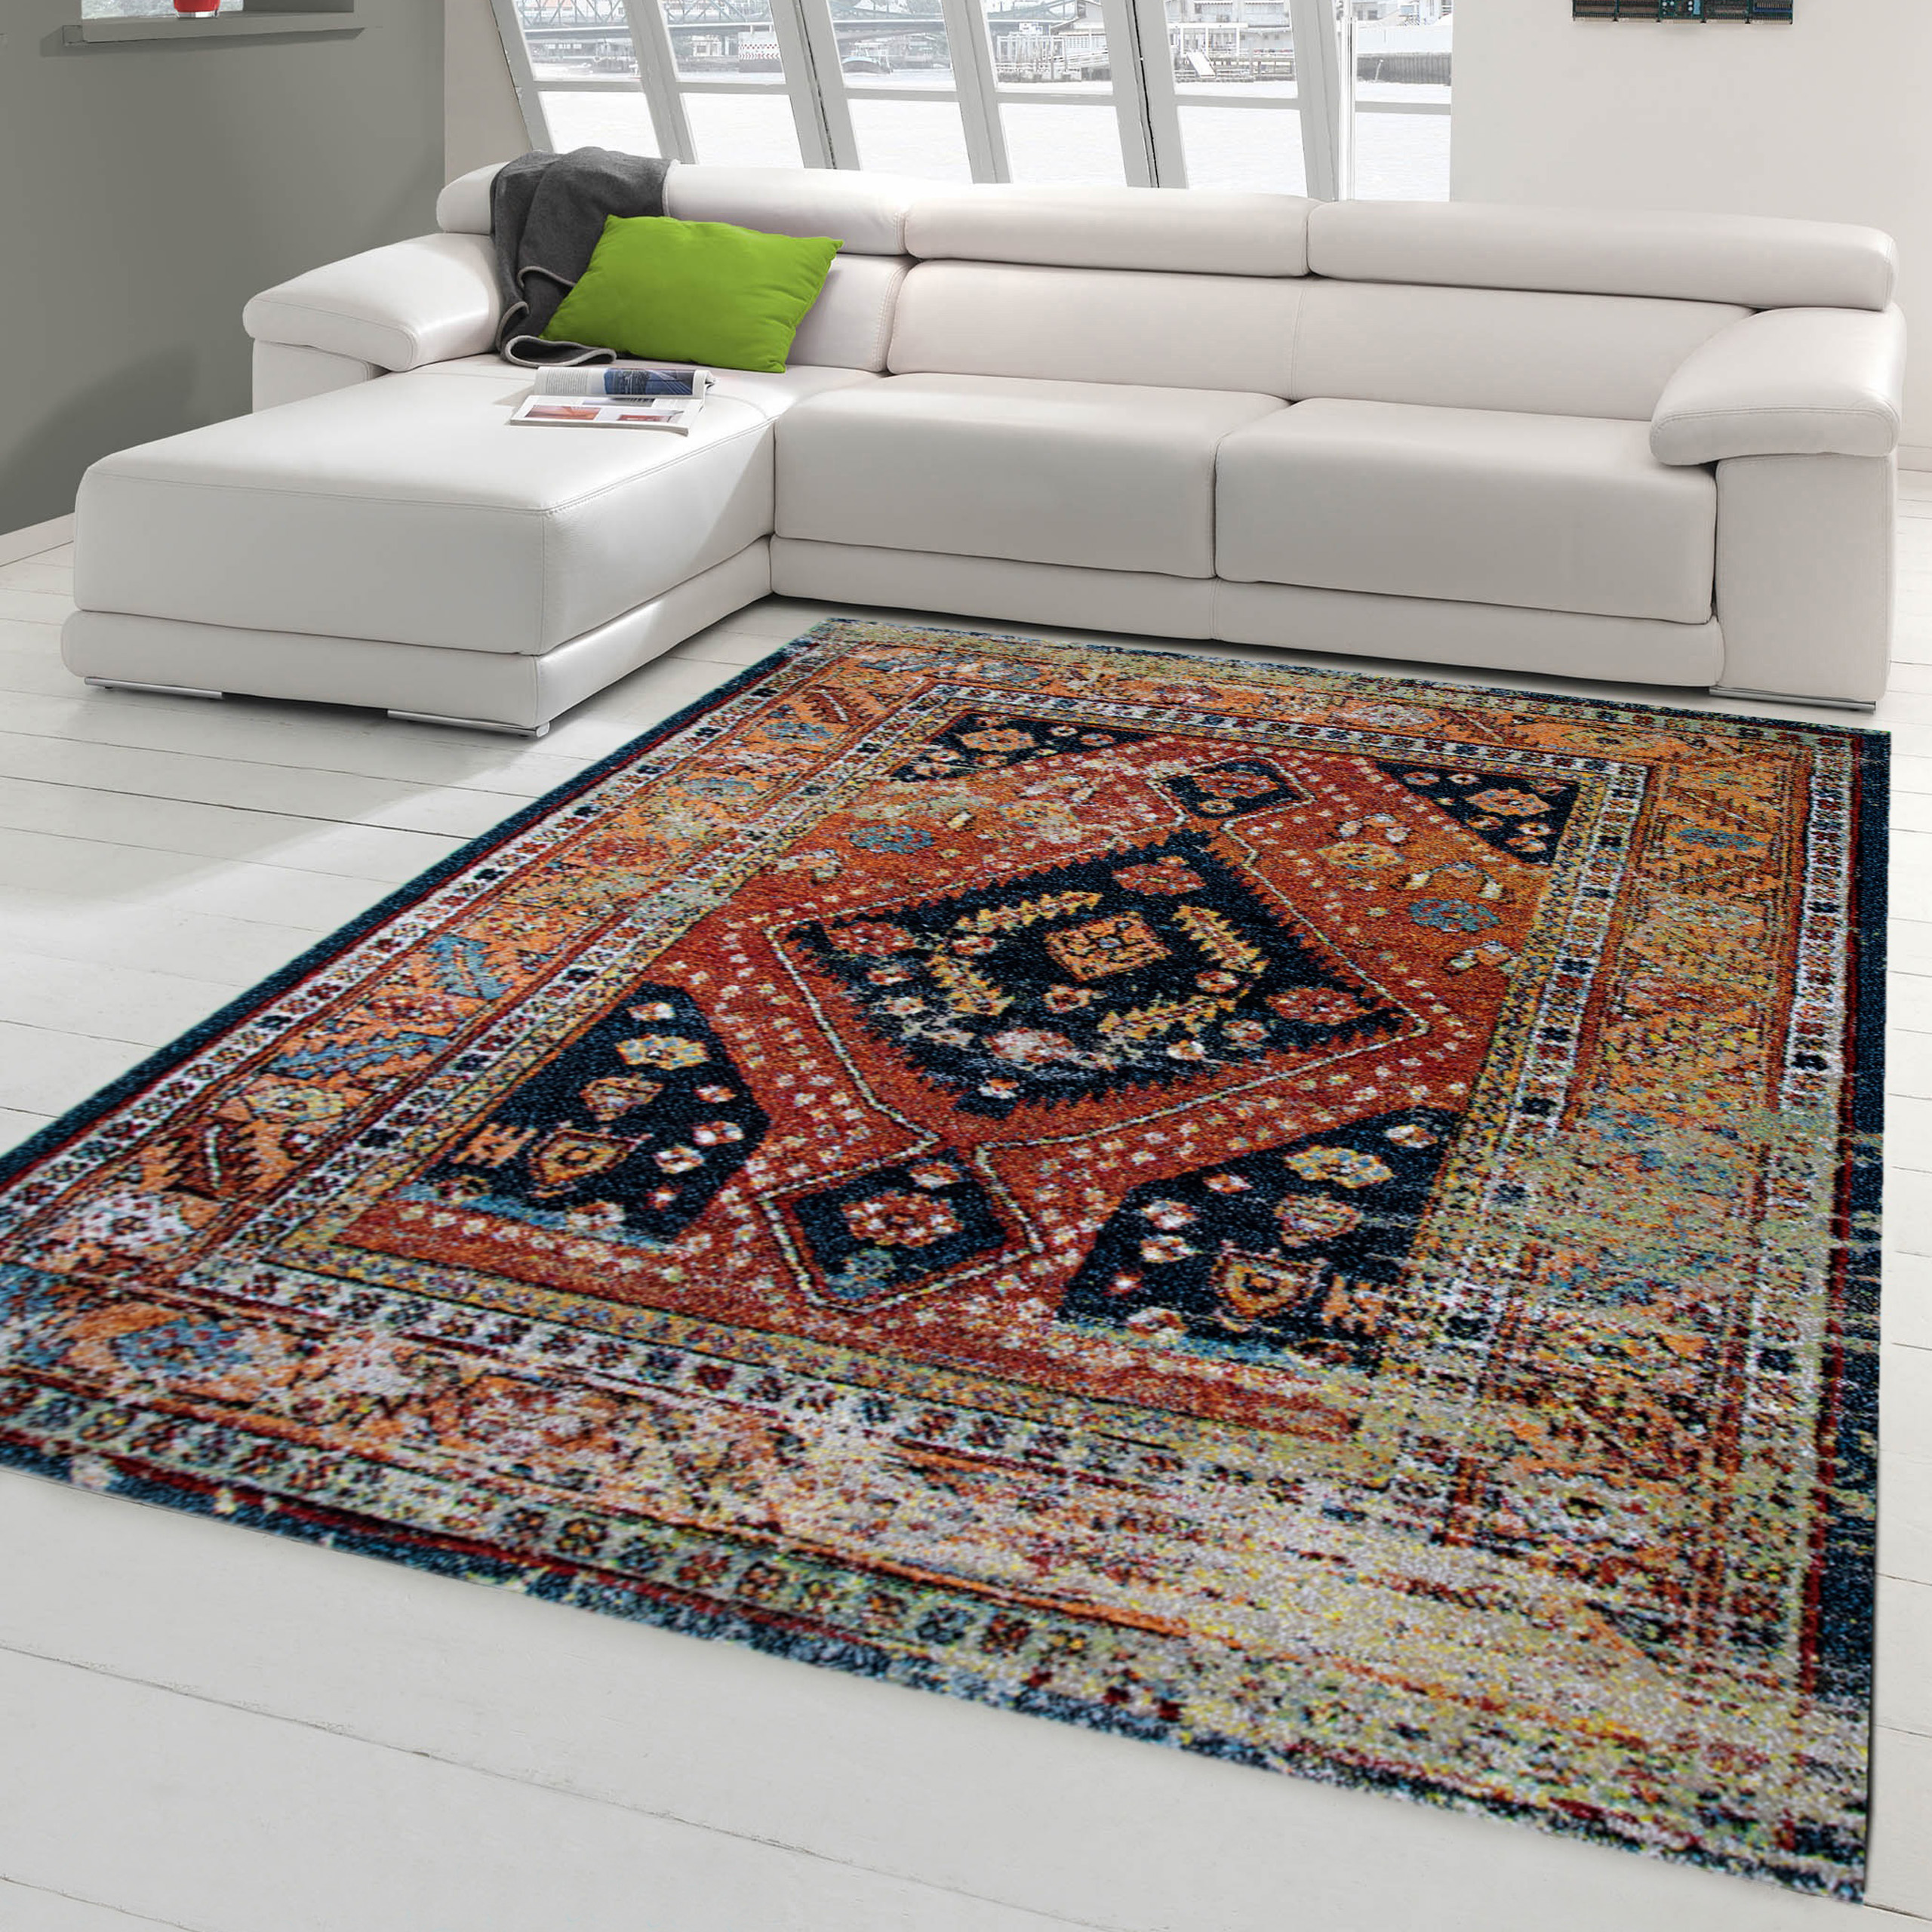 Modern & designer carpets: High-quality dreams carpet -Traum Teppich and - cheap at